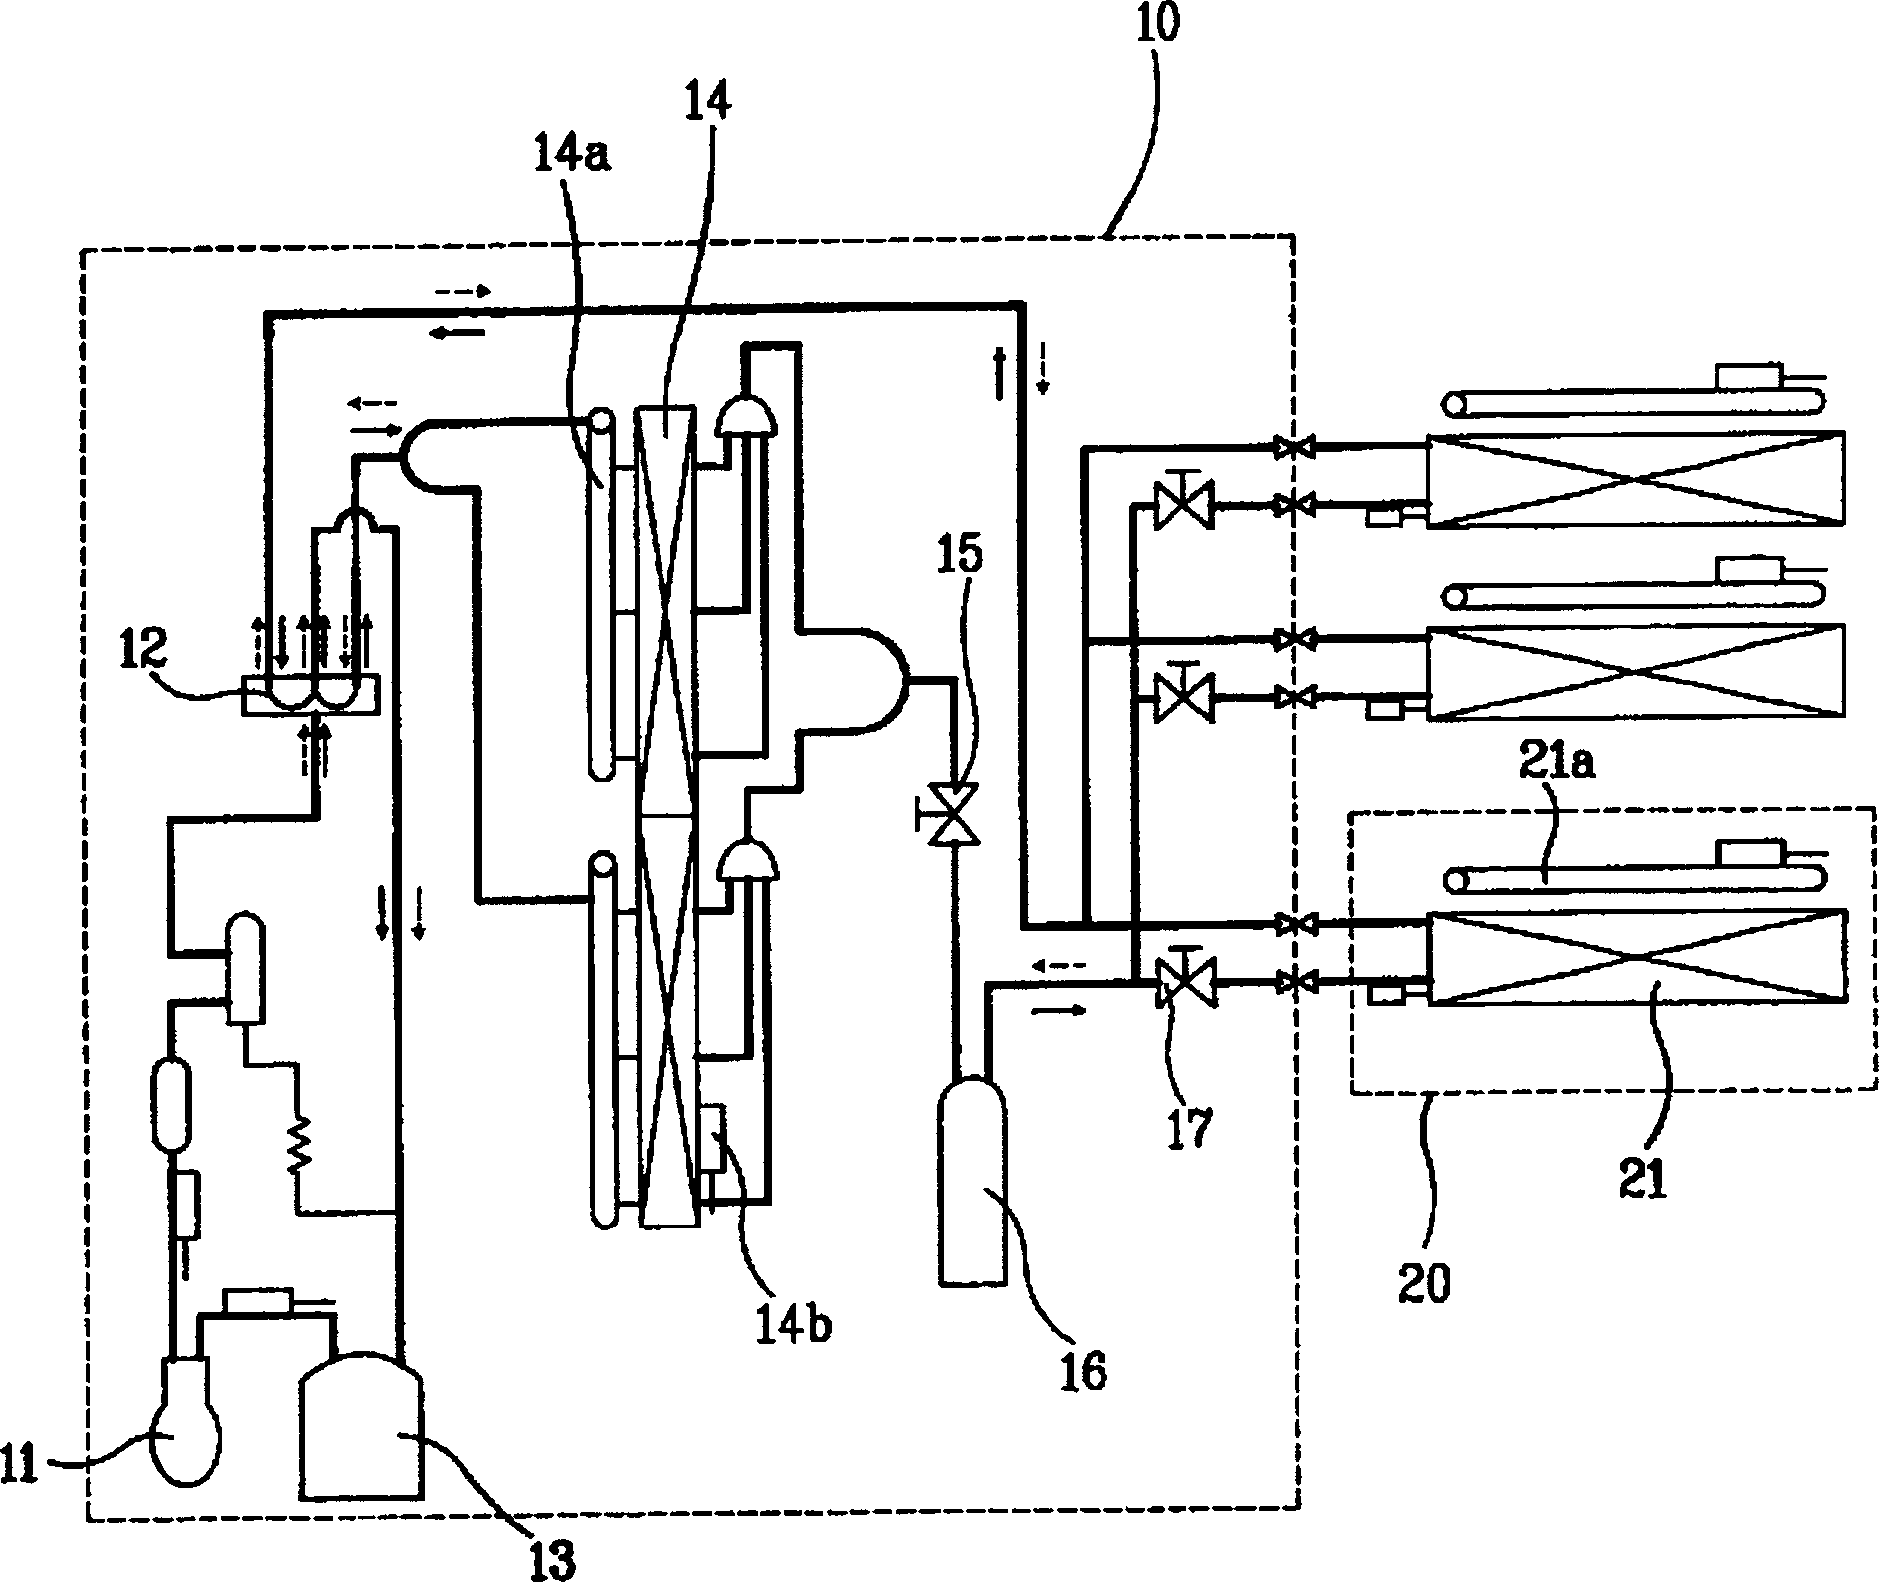 Defrosting operation method for heat pumps